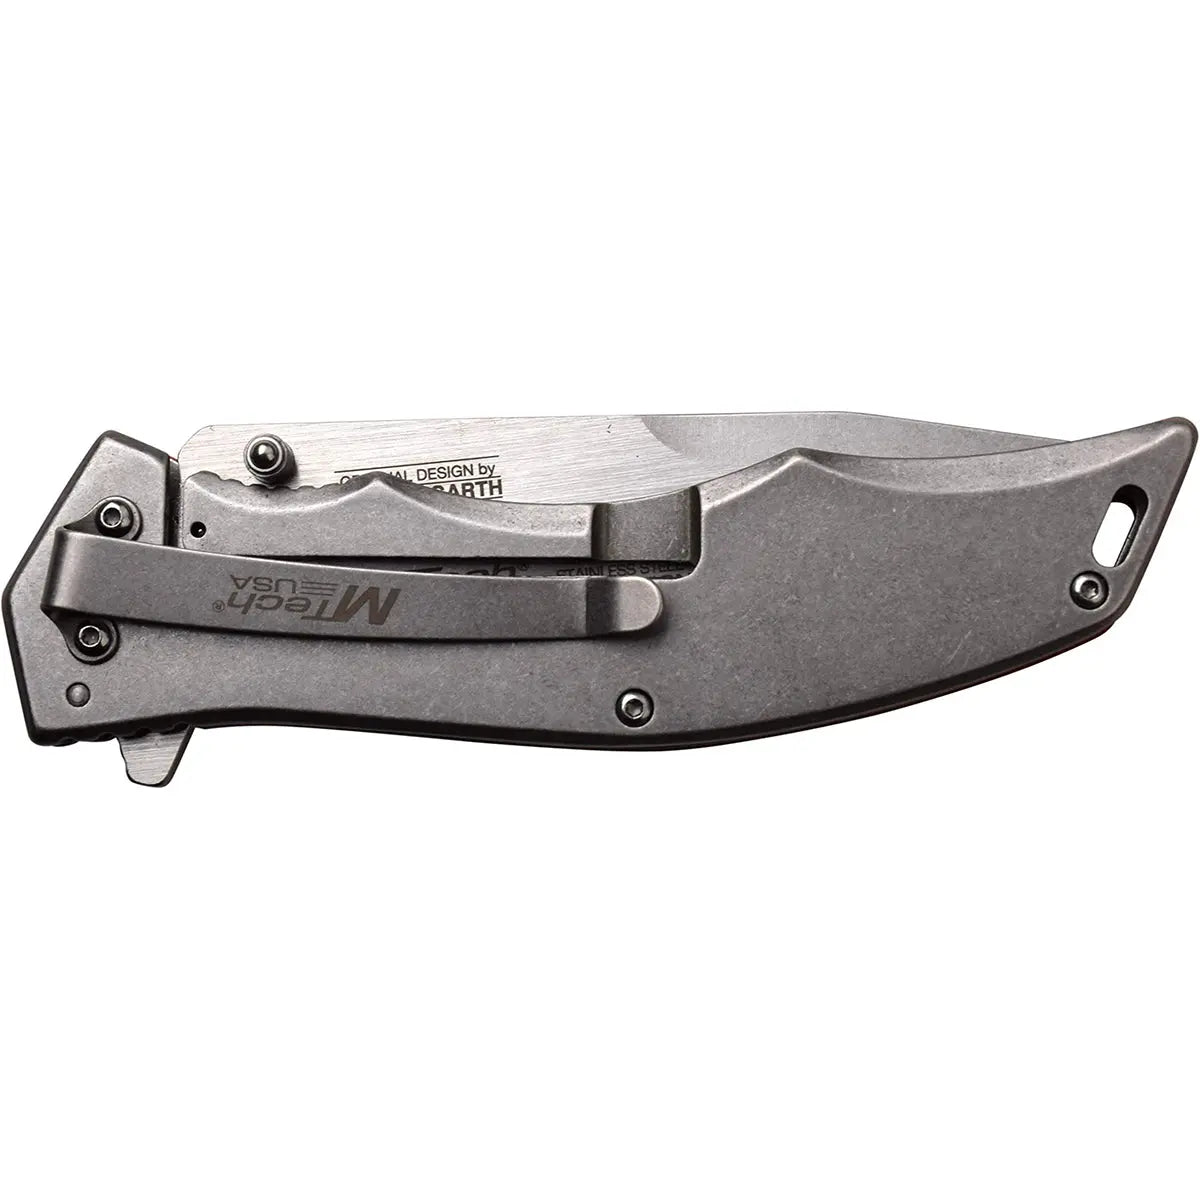 MTech USA Xtreme Linerlock Spring Assisted Folding Knife, Flag Blade, MX-A849CL M-Tech